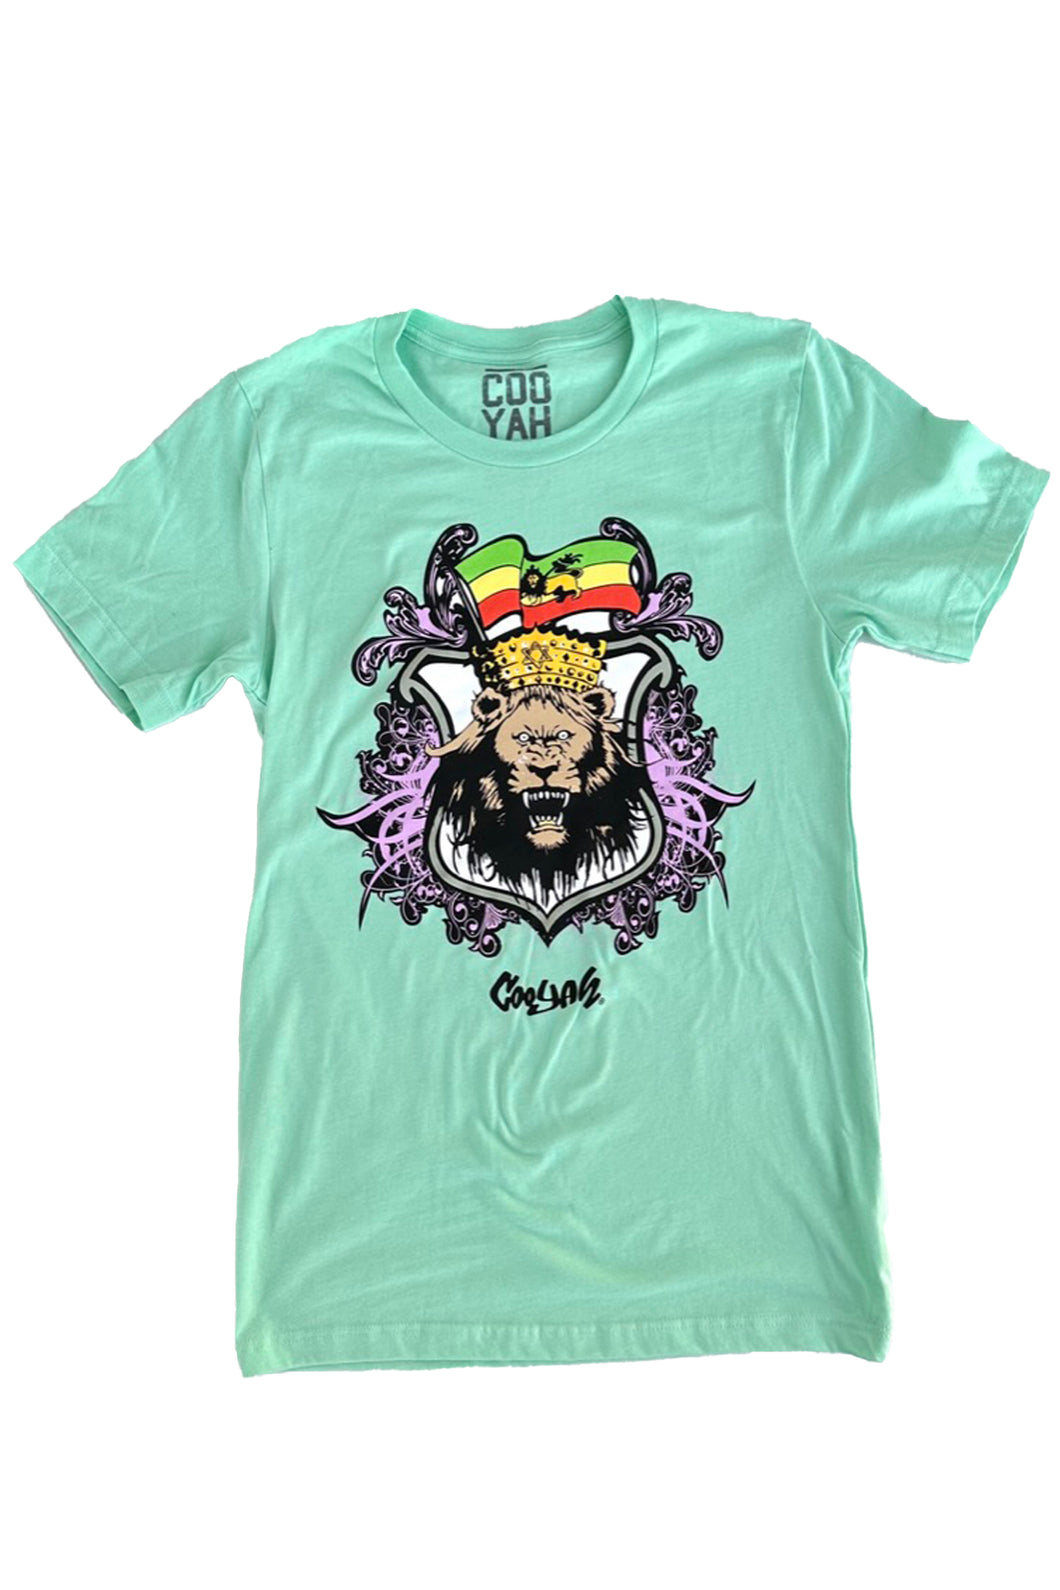 Cooyah Clothing, Rasta Lion short sleeve graphic tee in mint green. Jamaican streetwear Ethiopia Flag T-Shirt